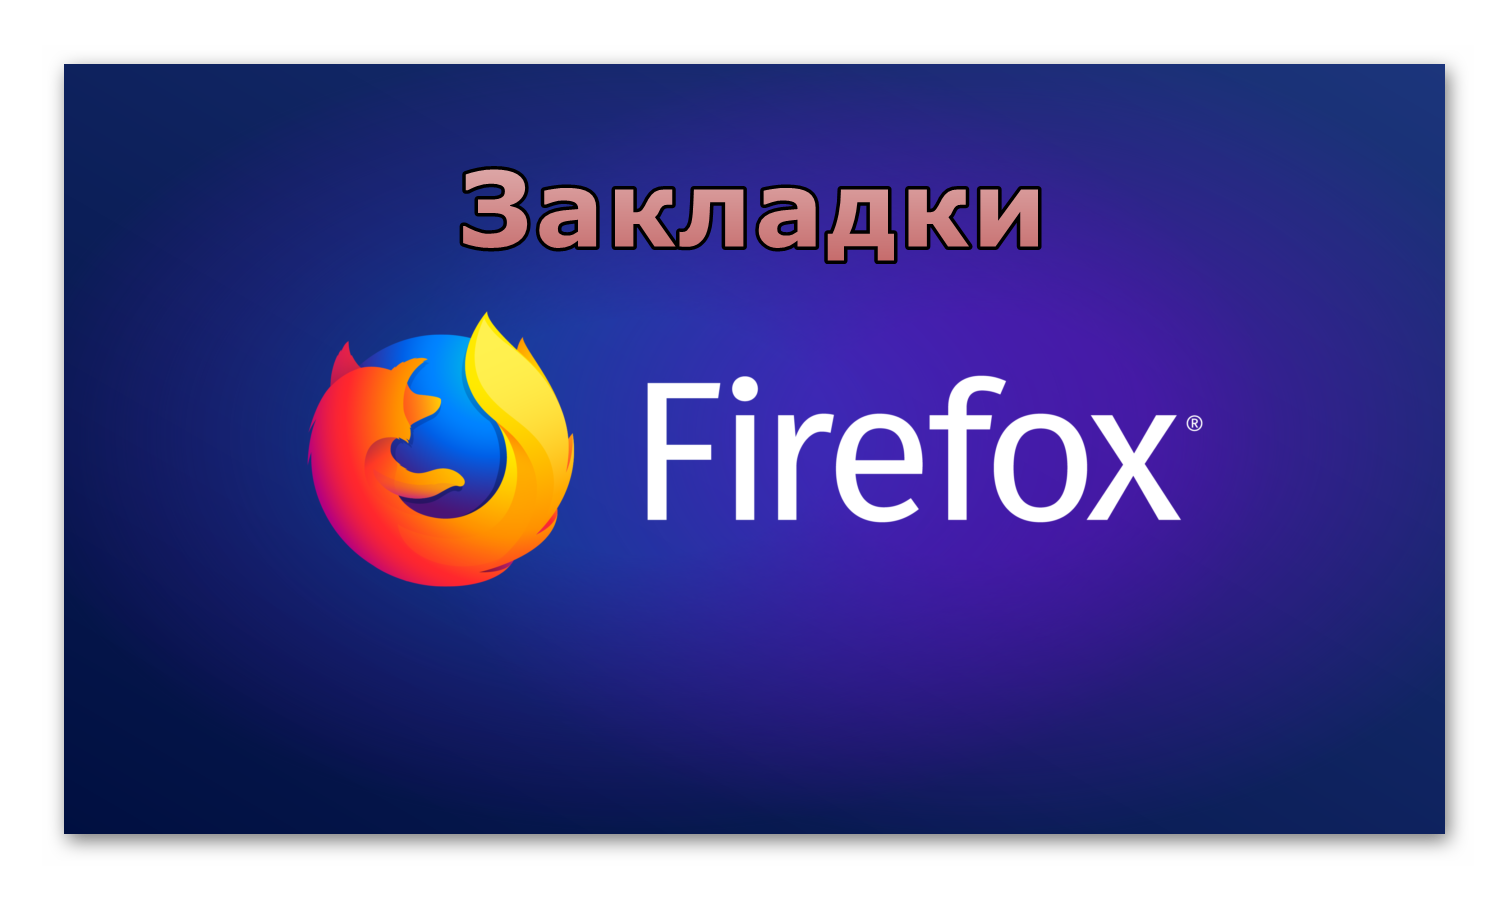 Картинка Закладки в Firefox